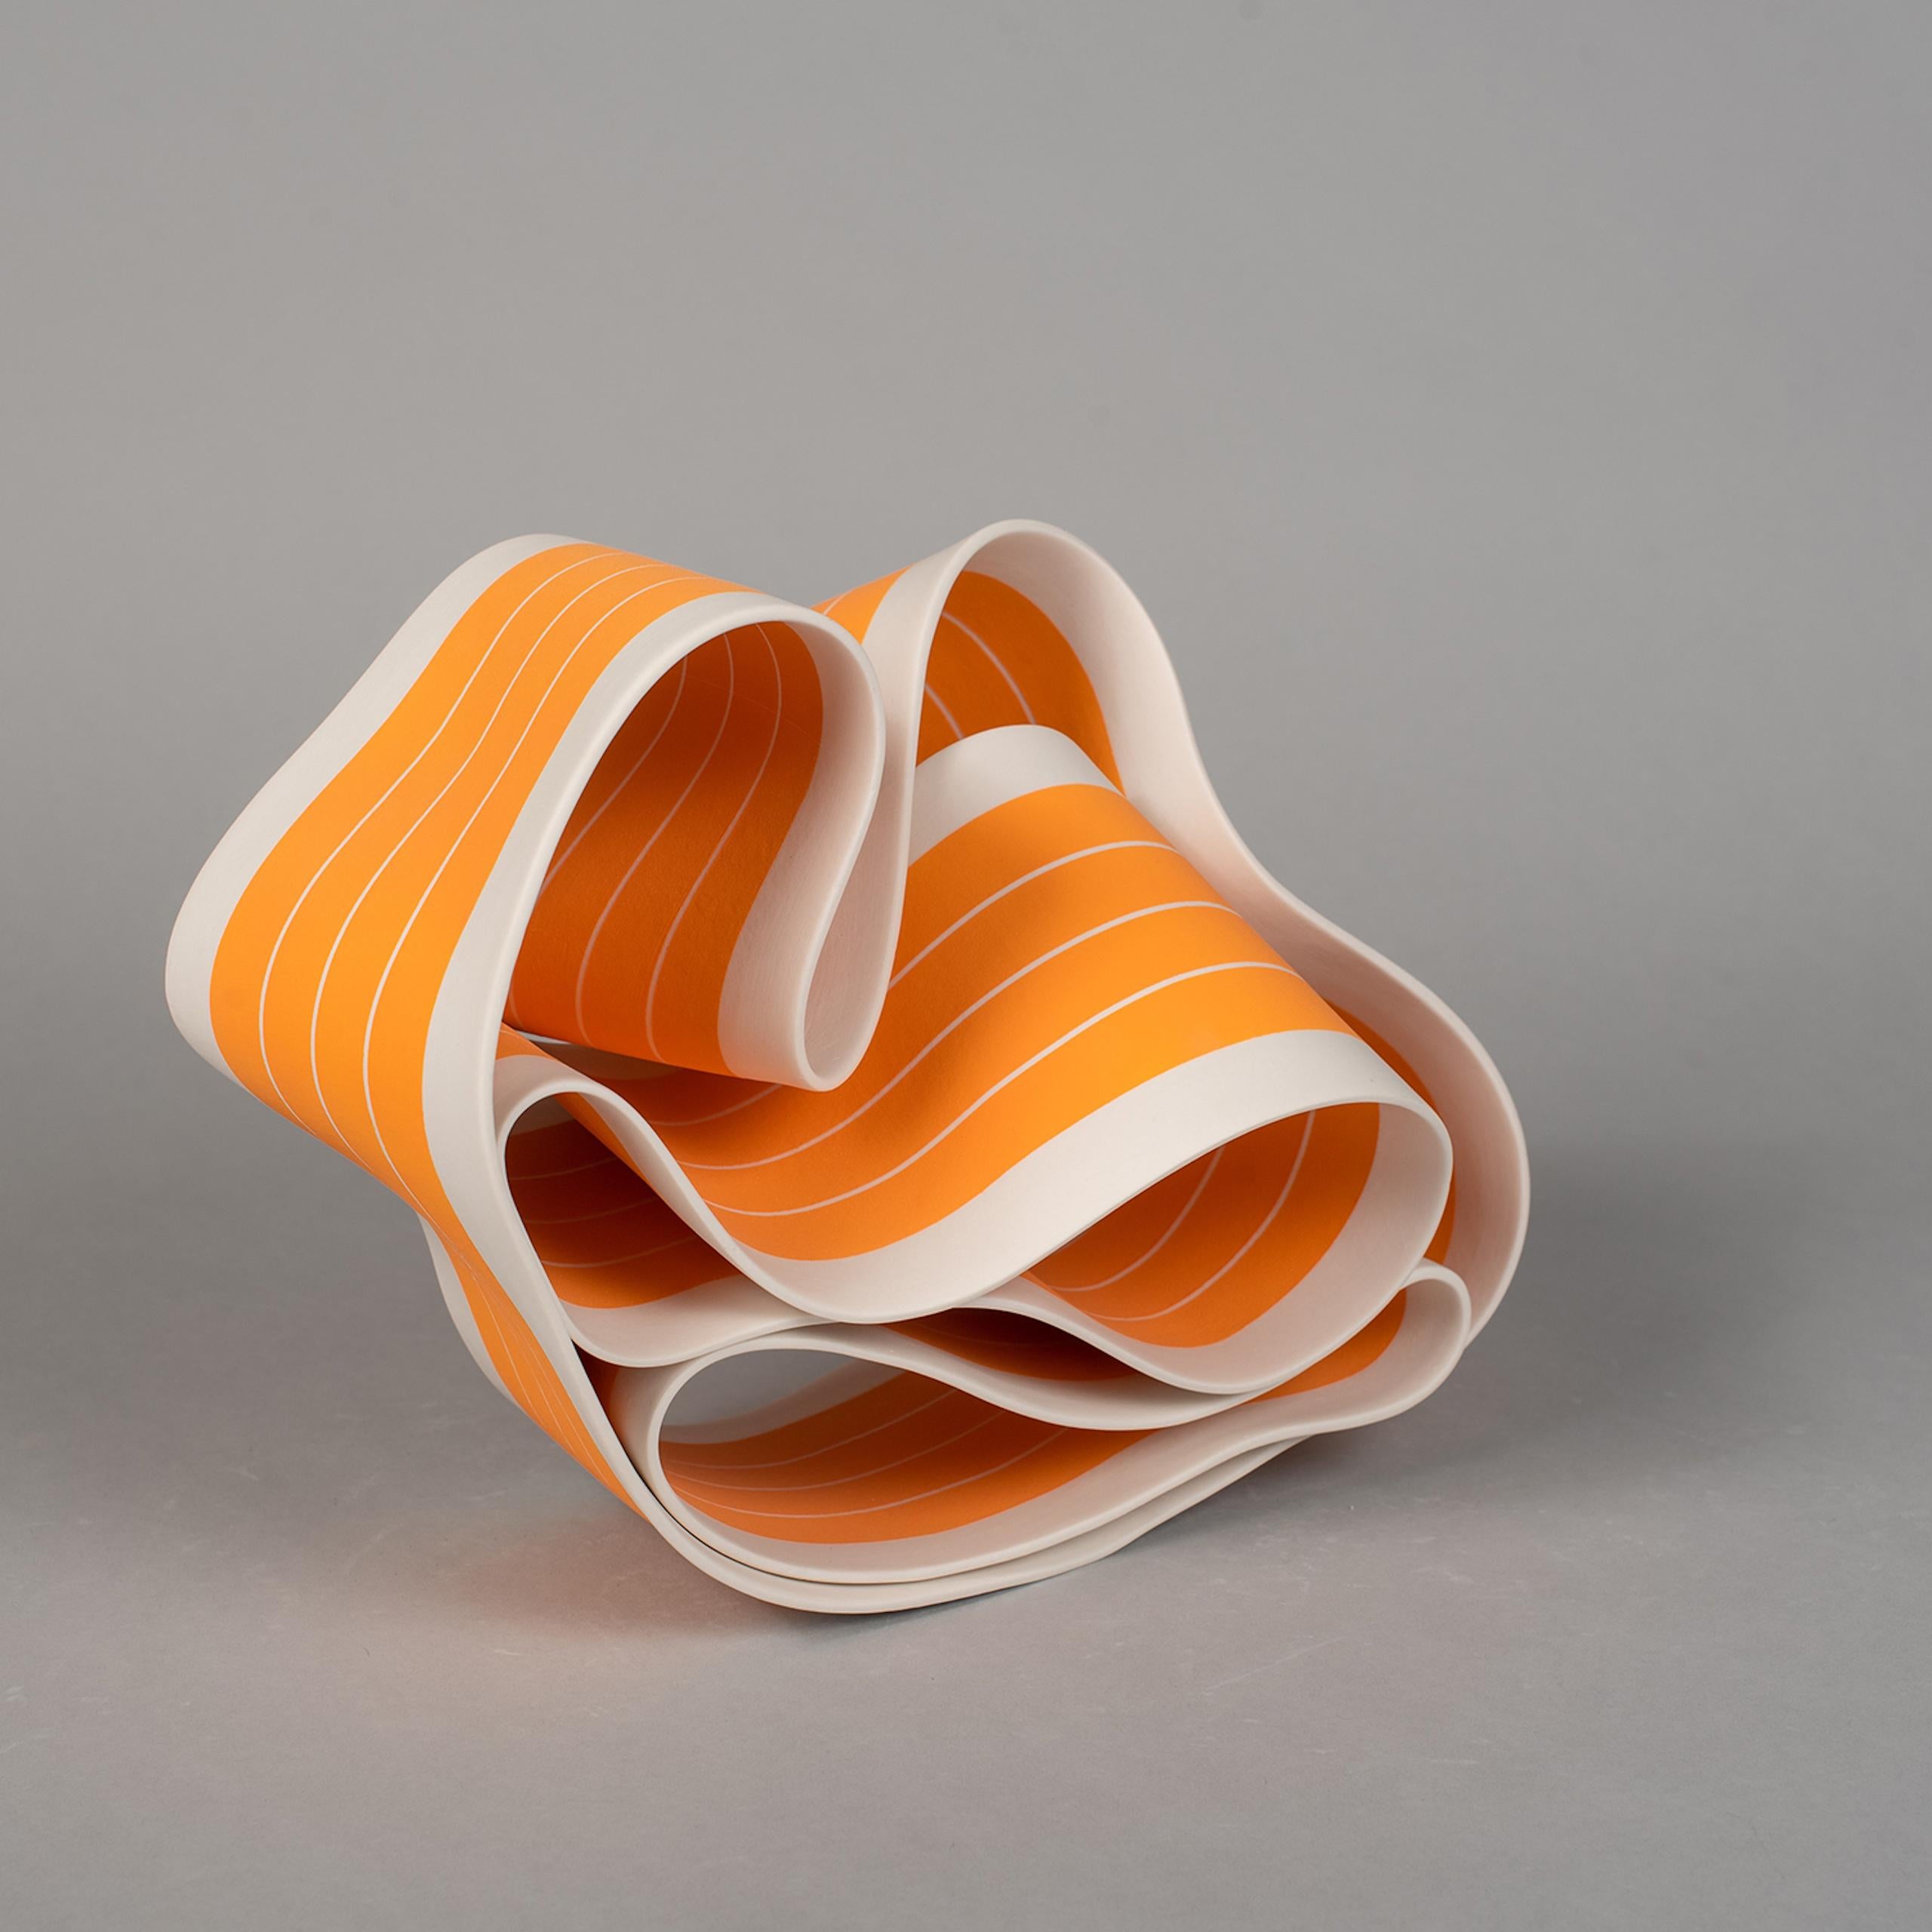 Folding in Motion 5 by Simcha Even-Chen - Porcelain sculpture, orange, line For Sale 2